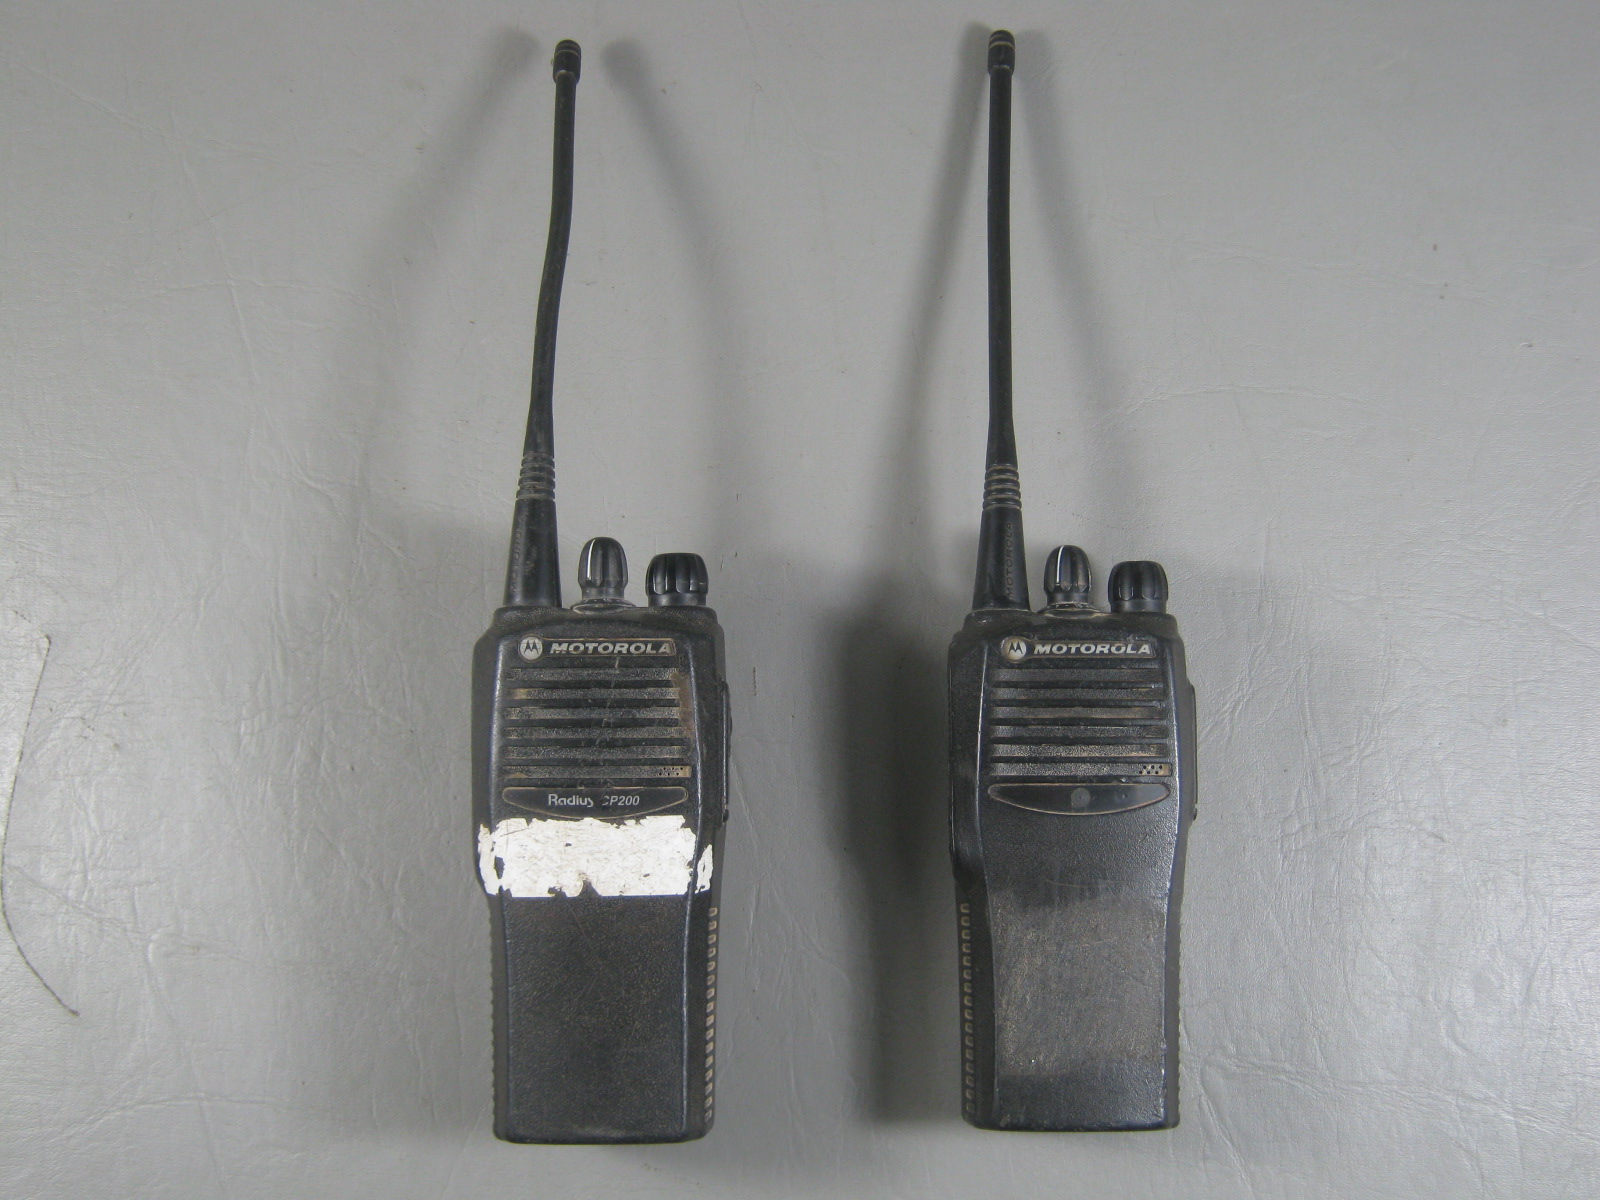 2 Motorola Radius CP200 UHF Narrow Band 2-Way Commercial Radios Tested + Working